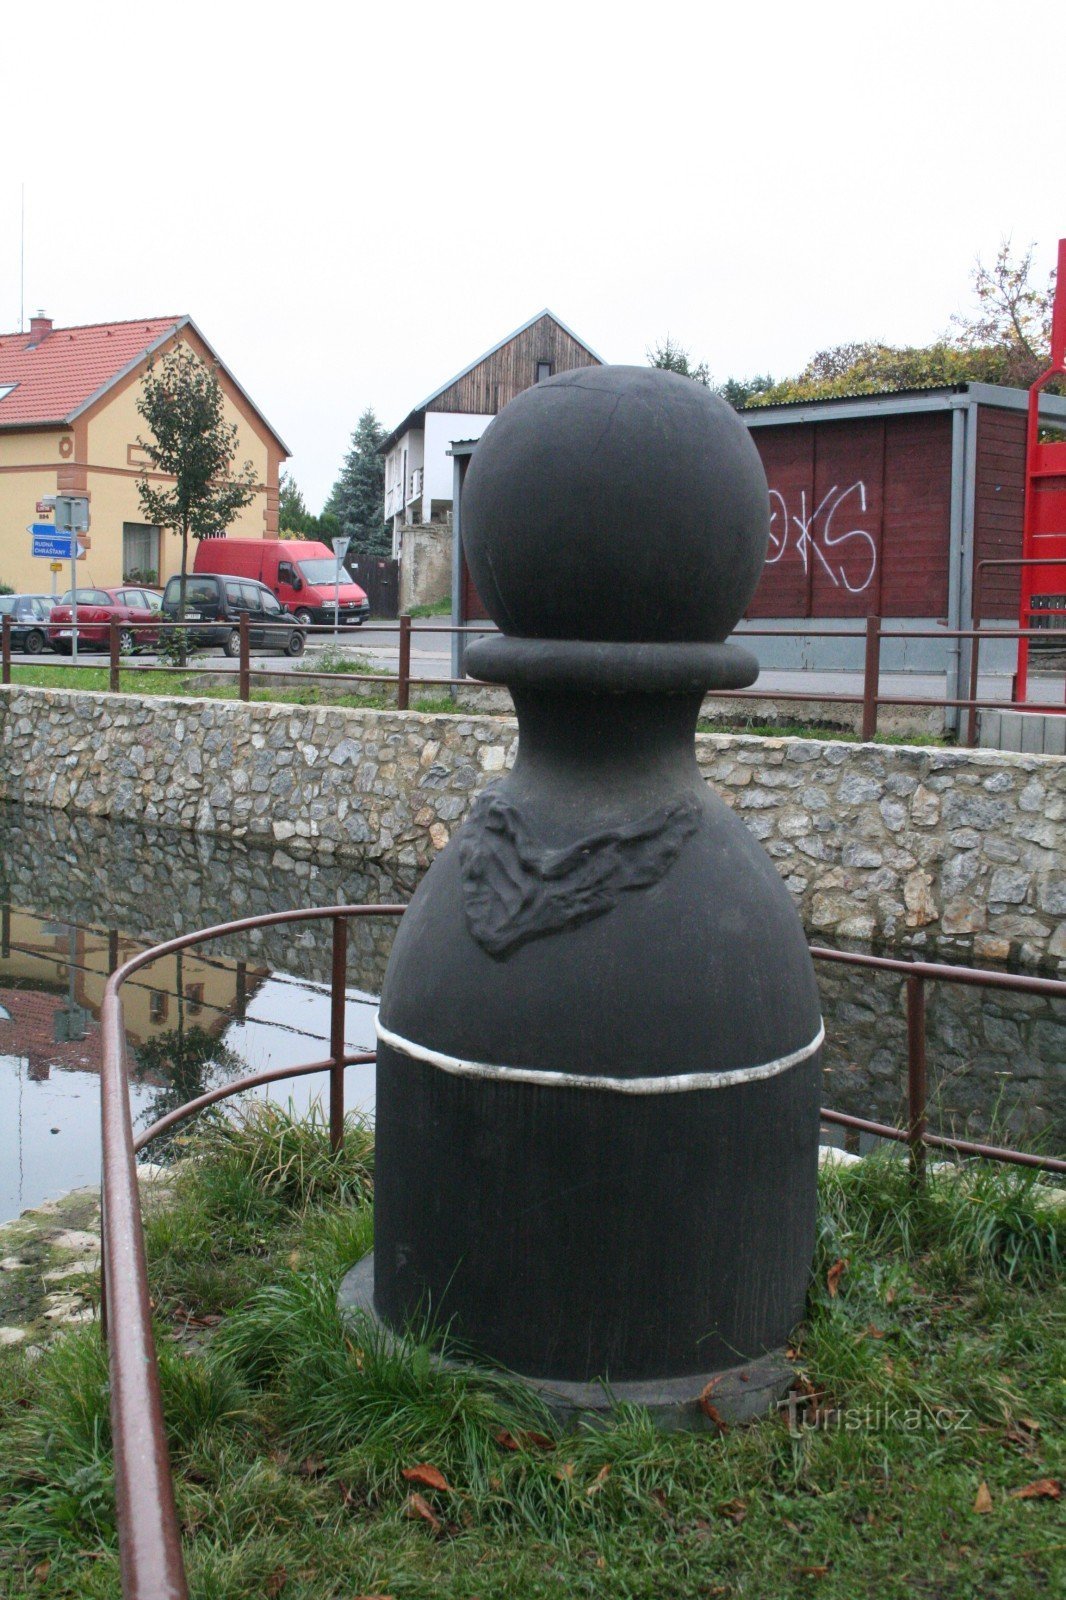 Cờ vua Karlštejnské - Con tốt đen của Jinočany